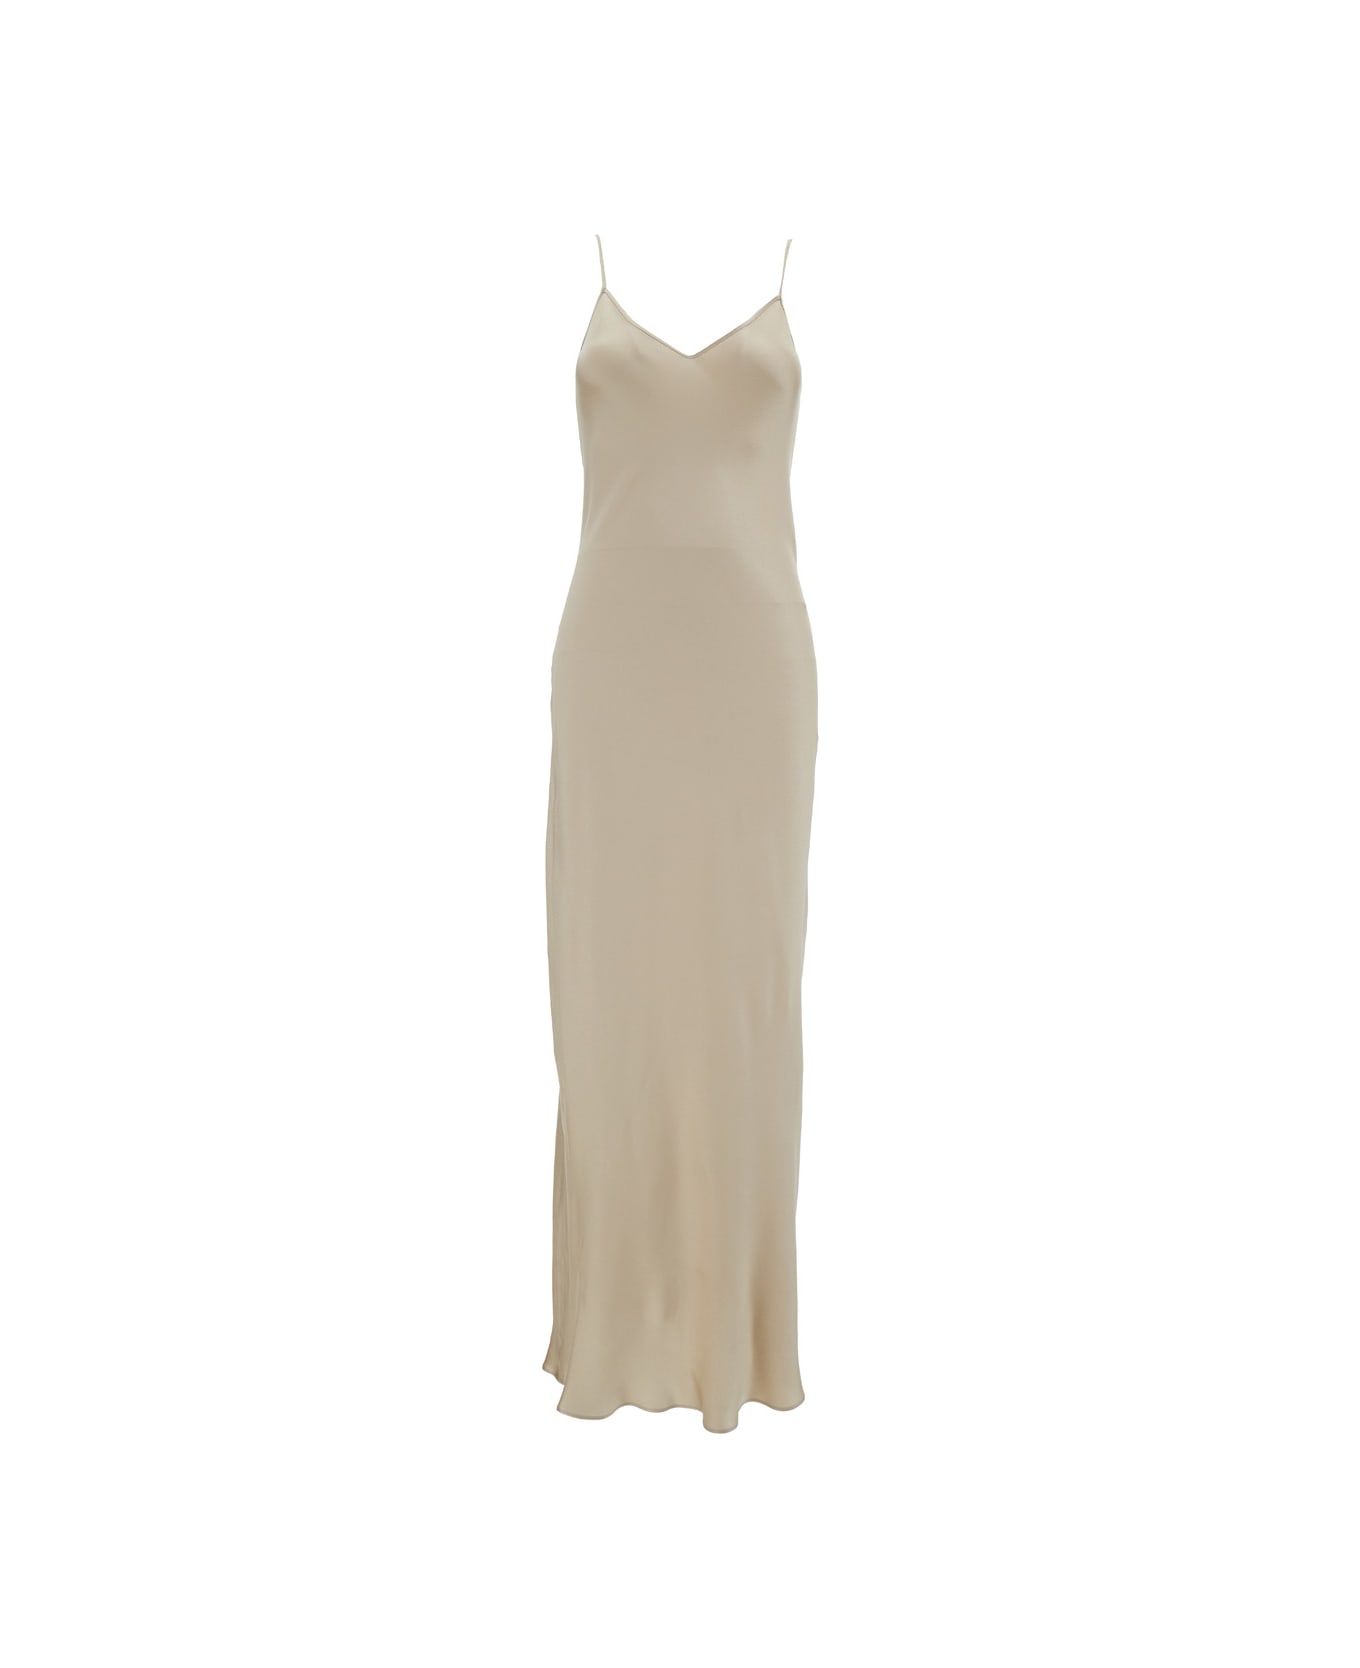 Antonelli Long Beige Dress With V Neckline In Acetate Blend Woman - Beige